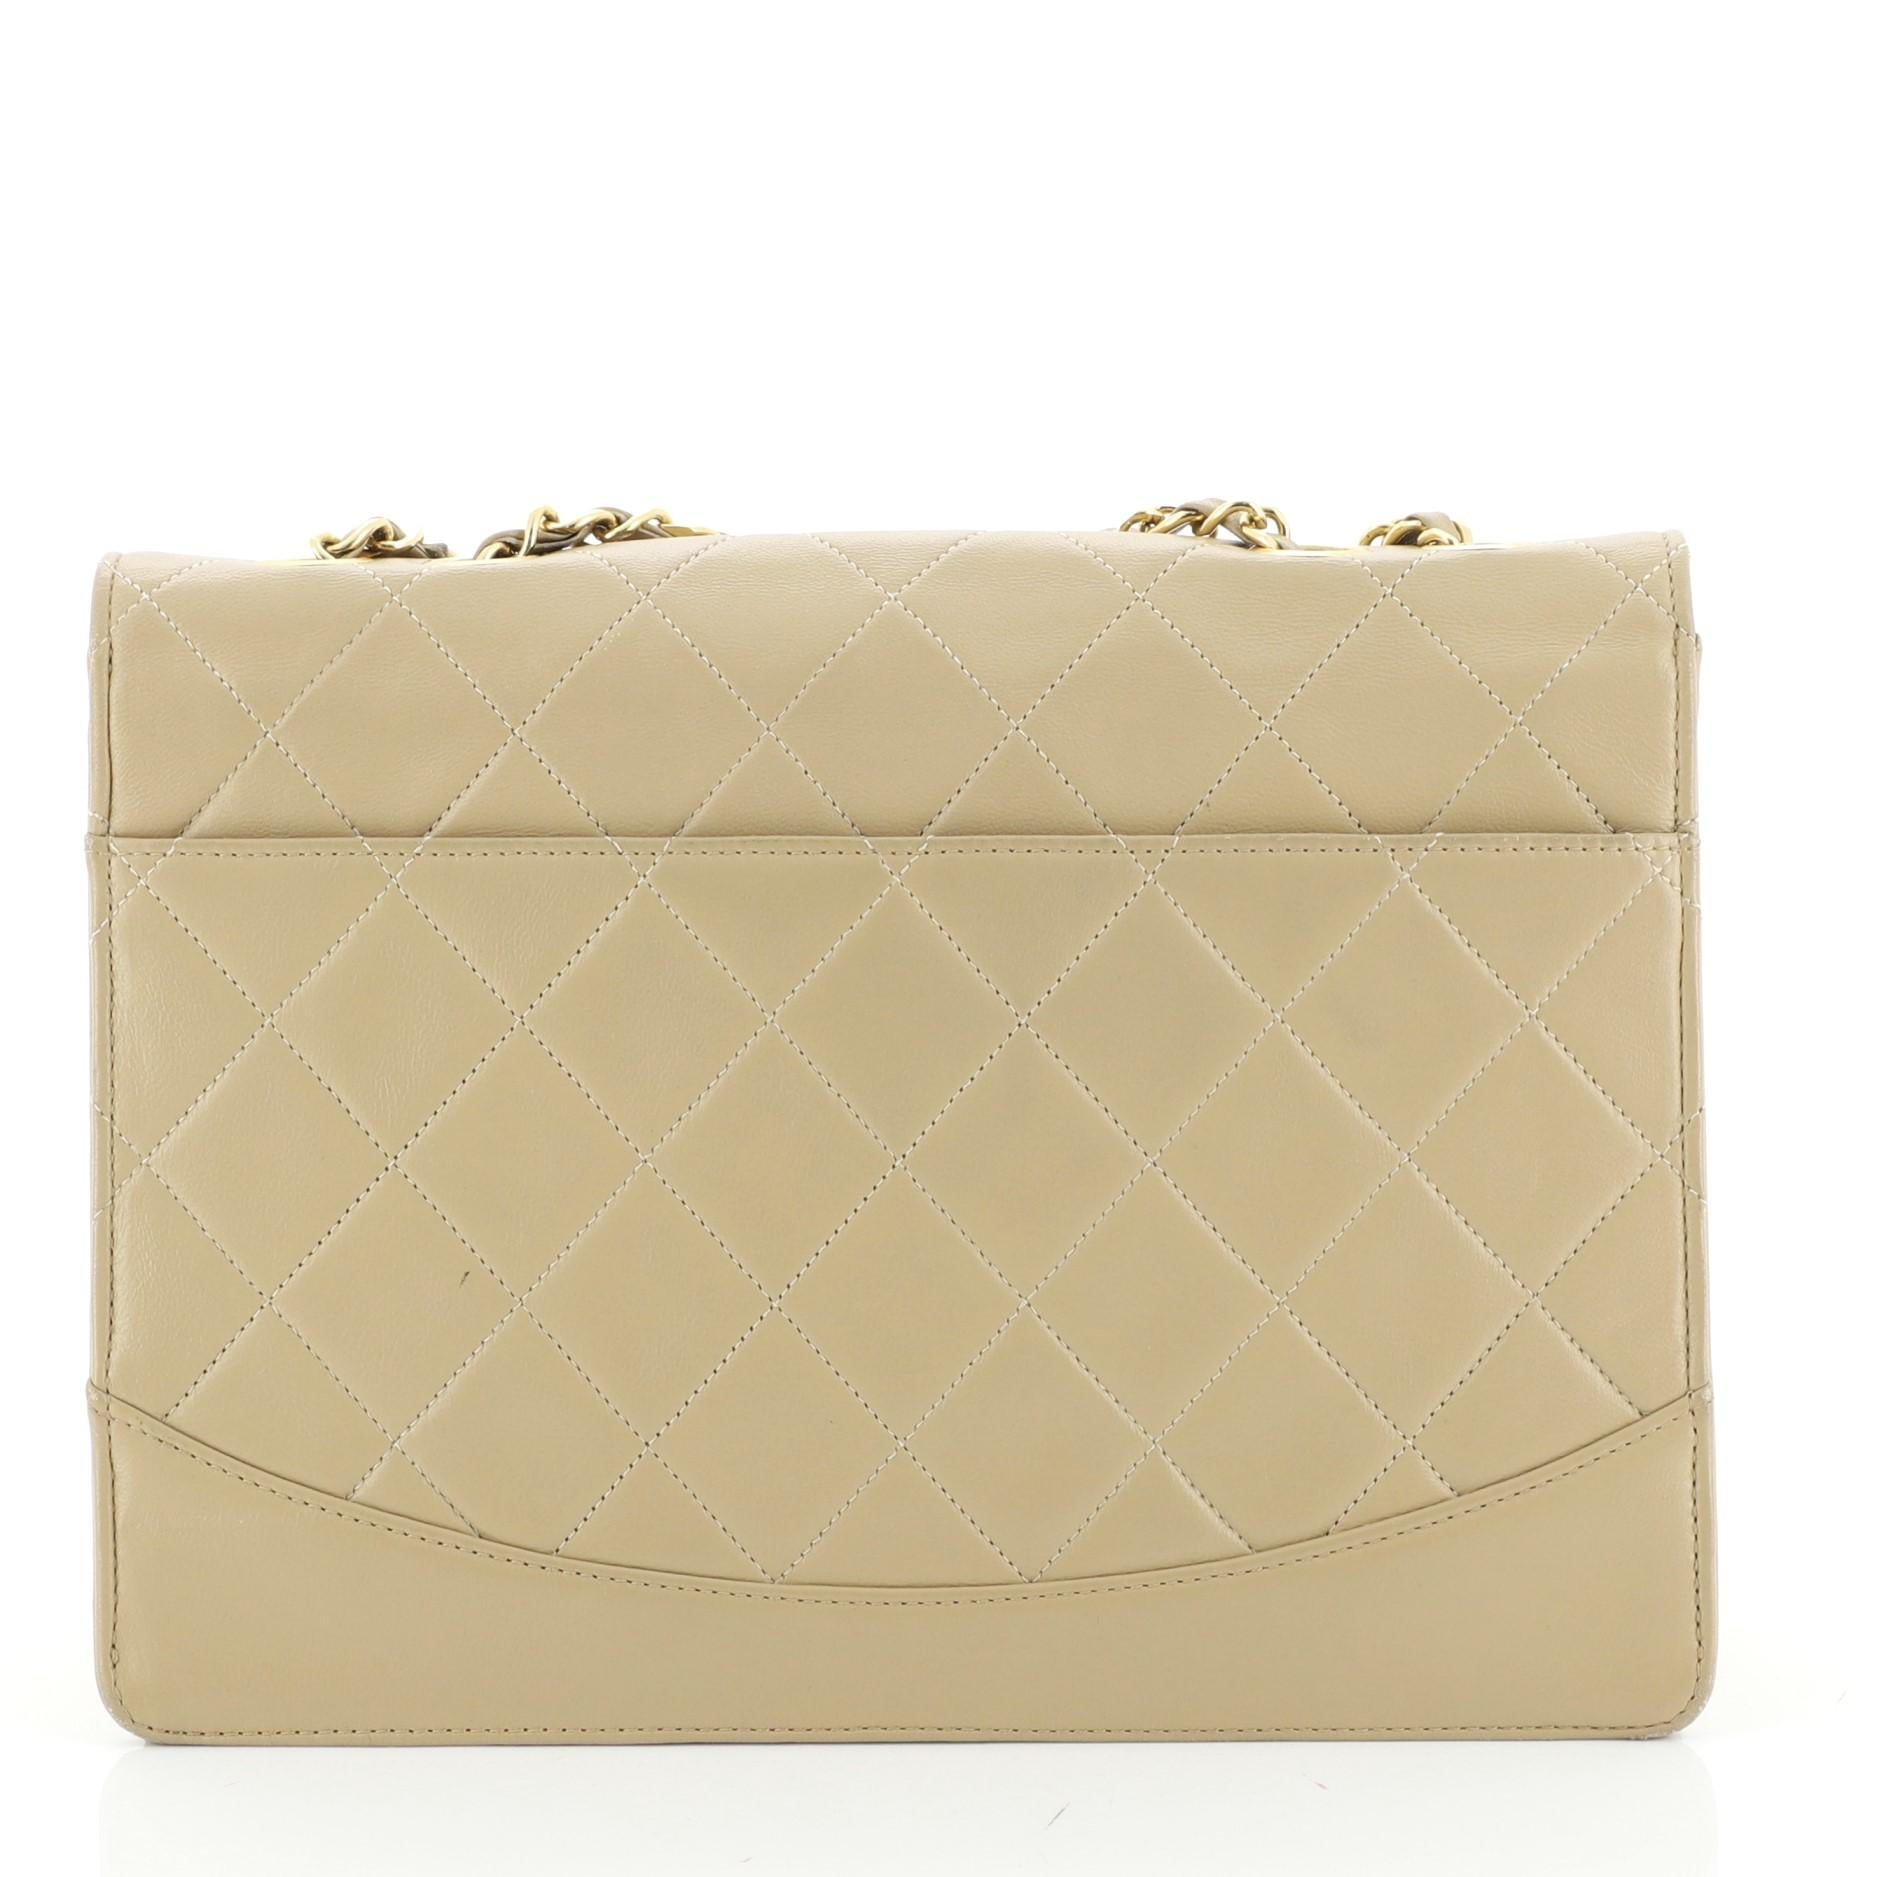 Beige Chanel Vintage Trapezoid Flap Lock Bag Leather Medium